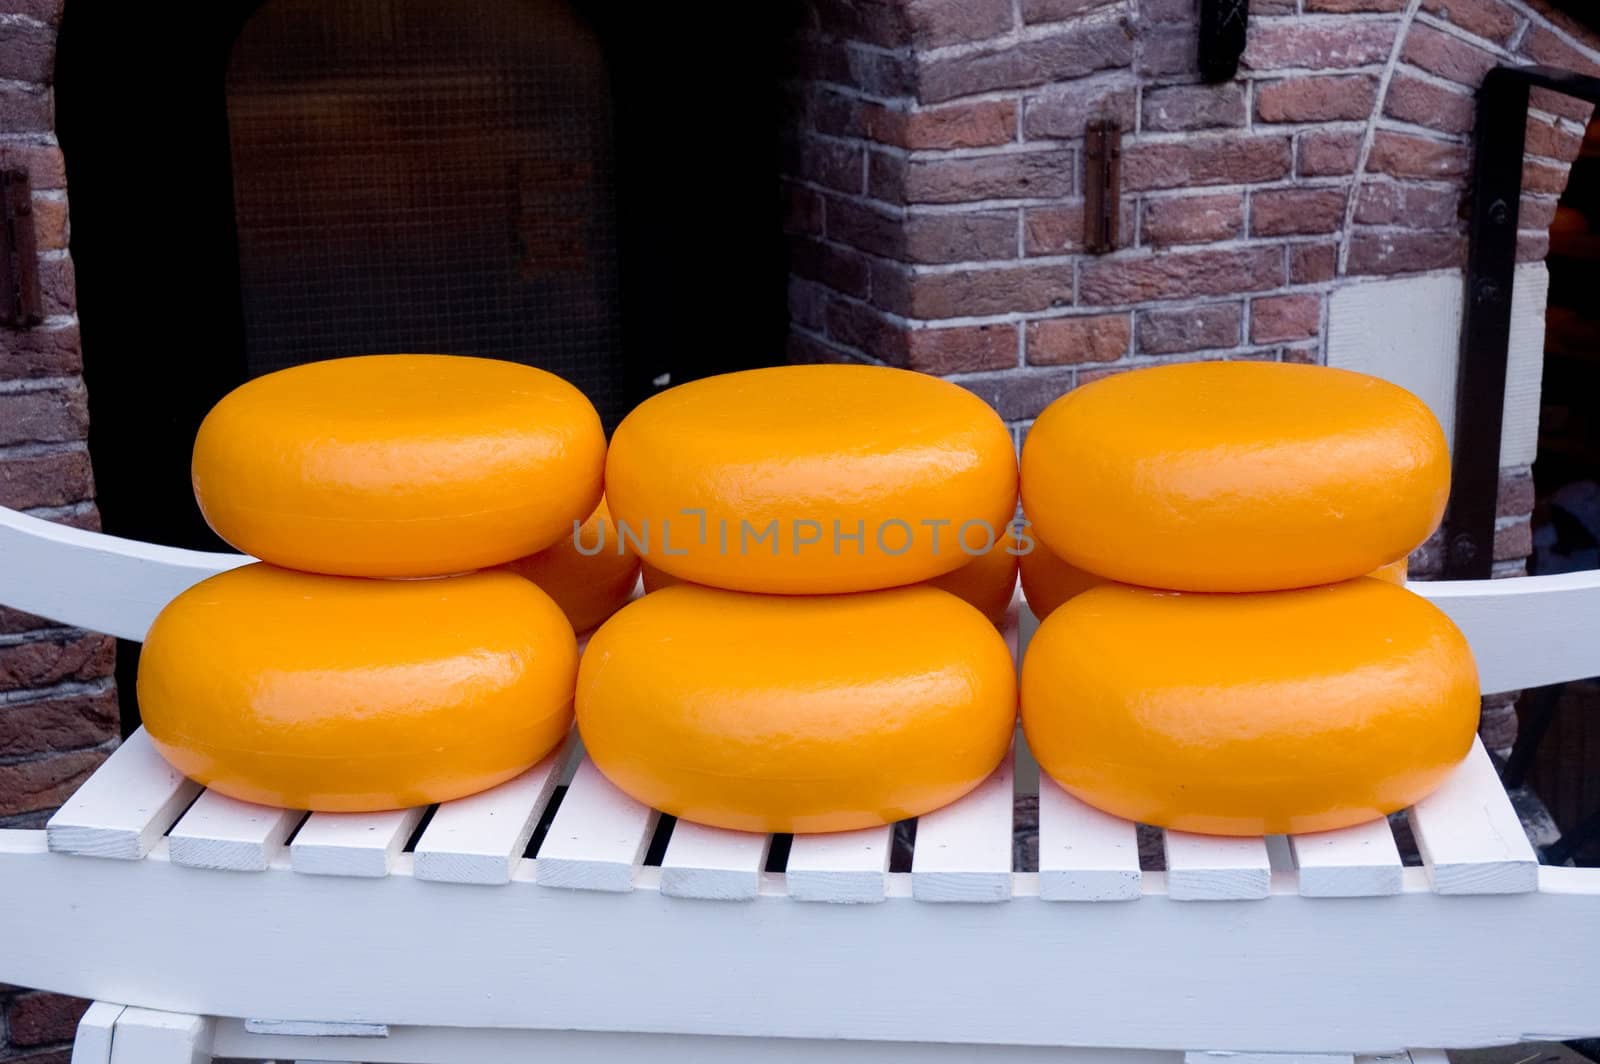 Dutch cheese on a white car by ladyminnie